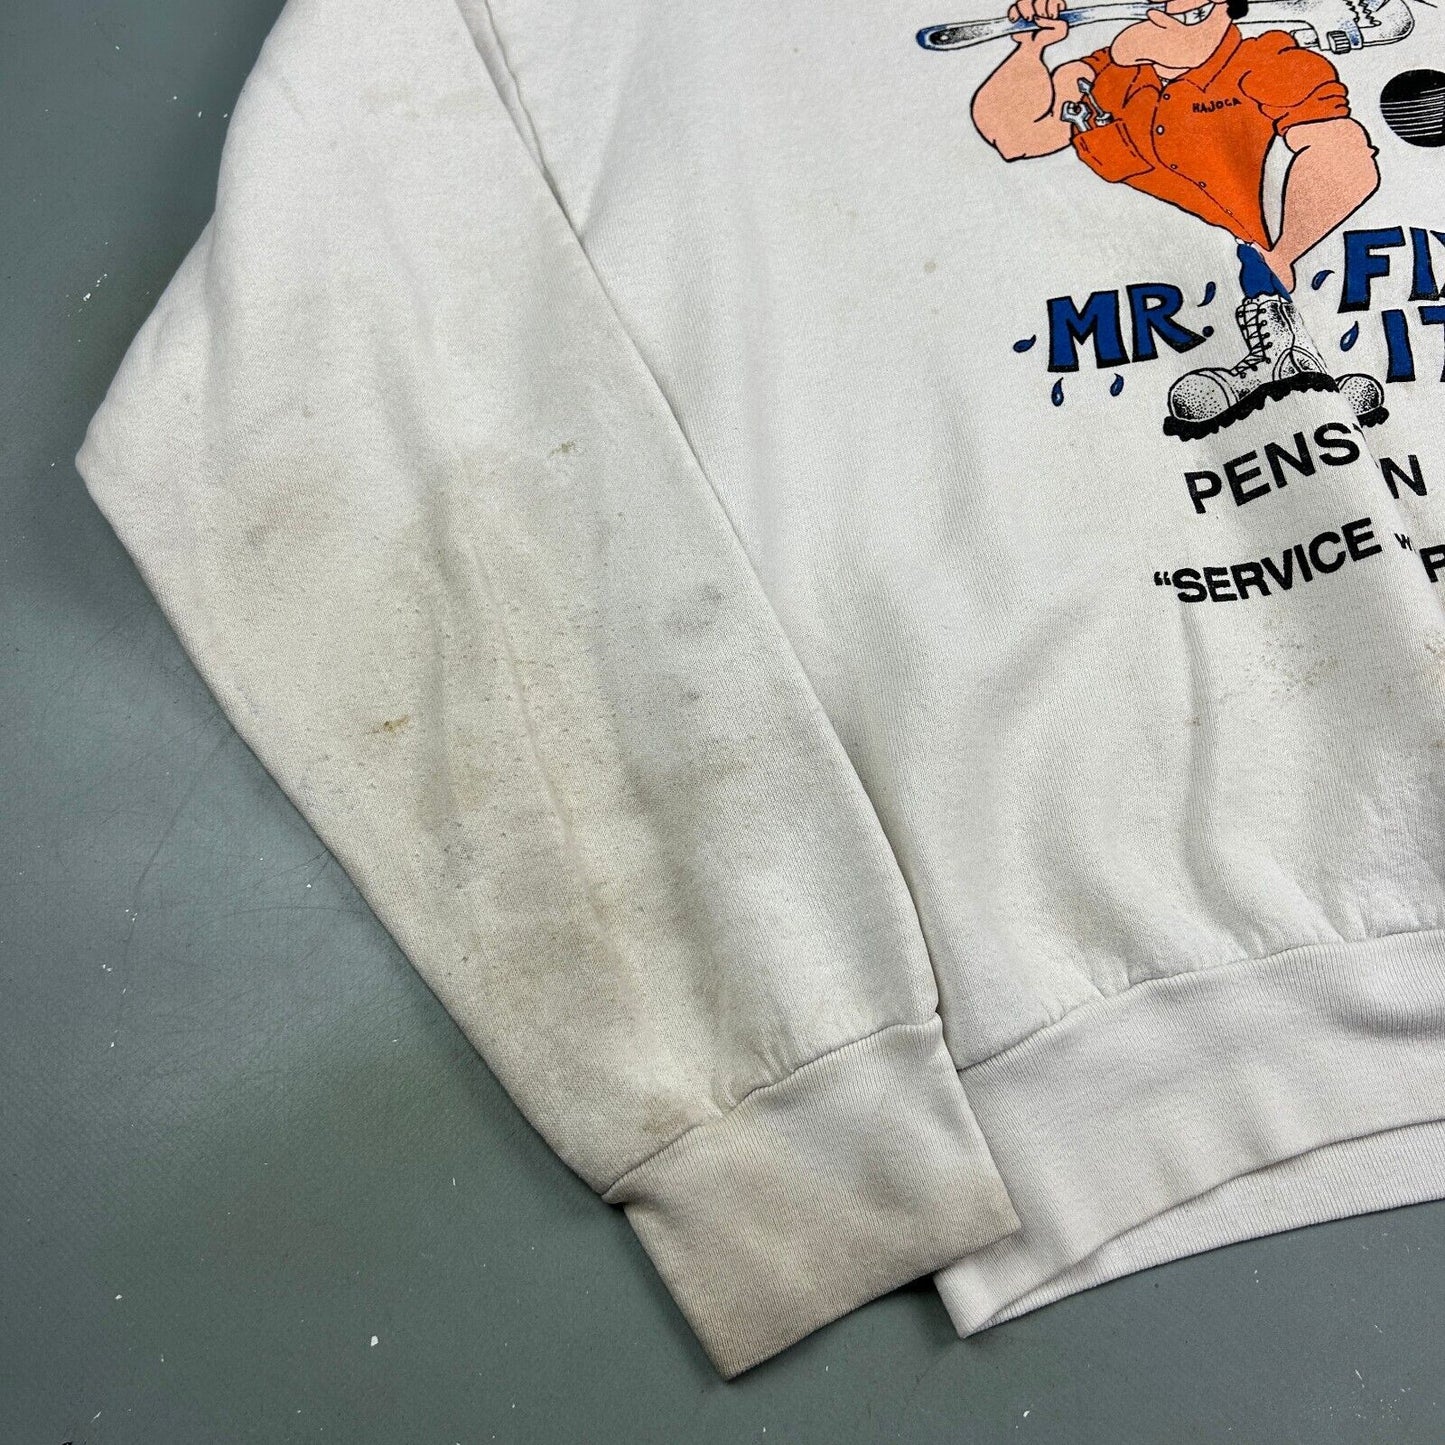 VINTAGE 90s The Incredible Mr Fix It Distressed Crewneck Sweater sz Medium Adult